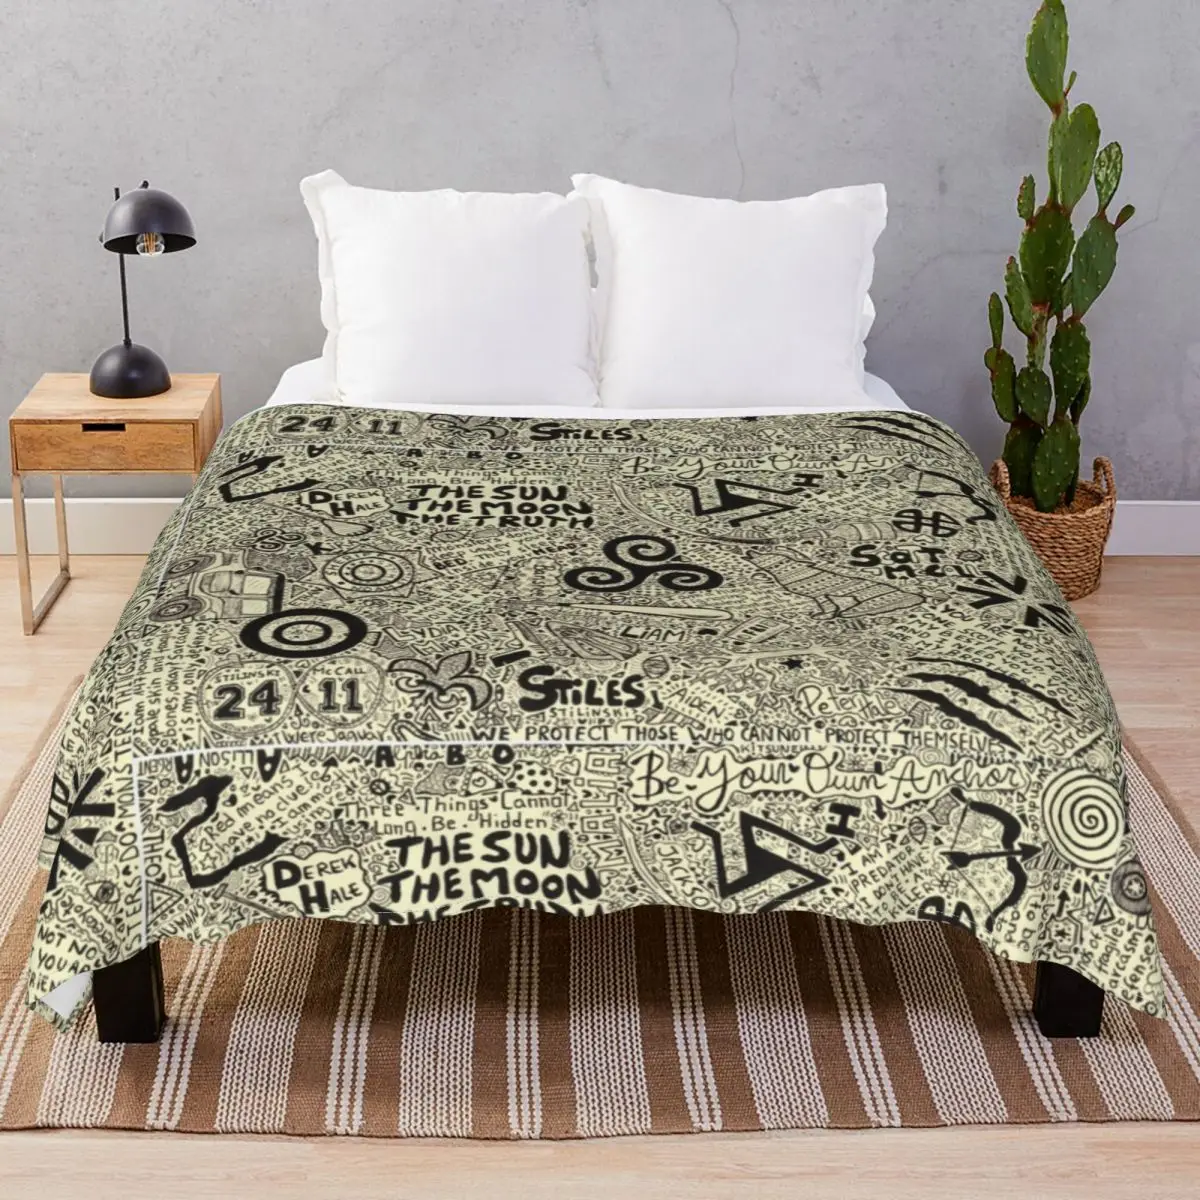 TeenWolf Blankets Fleece Autumn Breathable Throw Blanket for Bed Sofa Travel Cinema